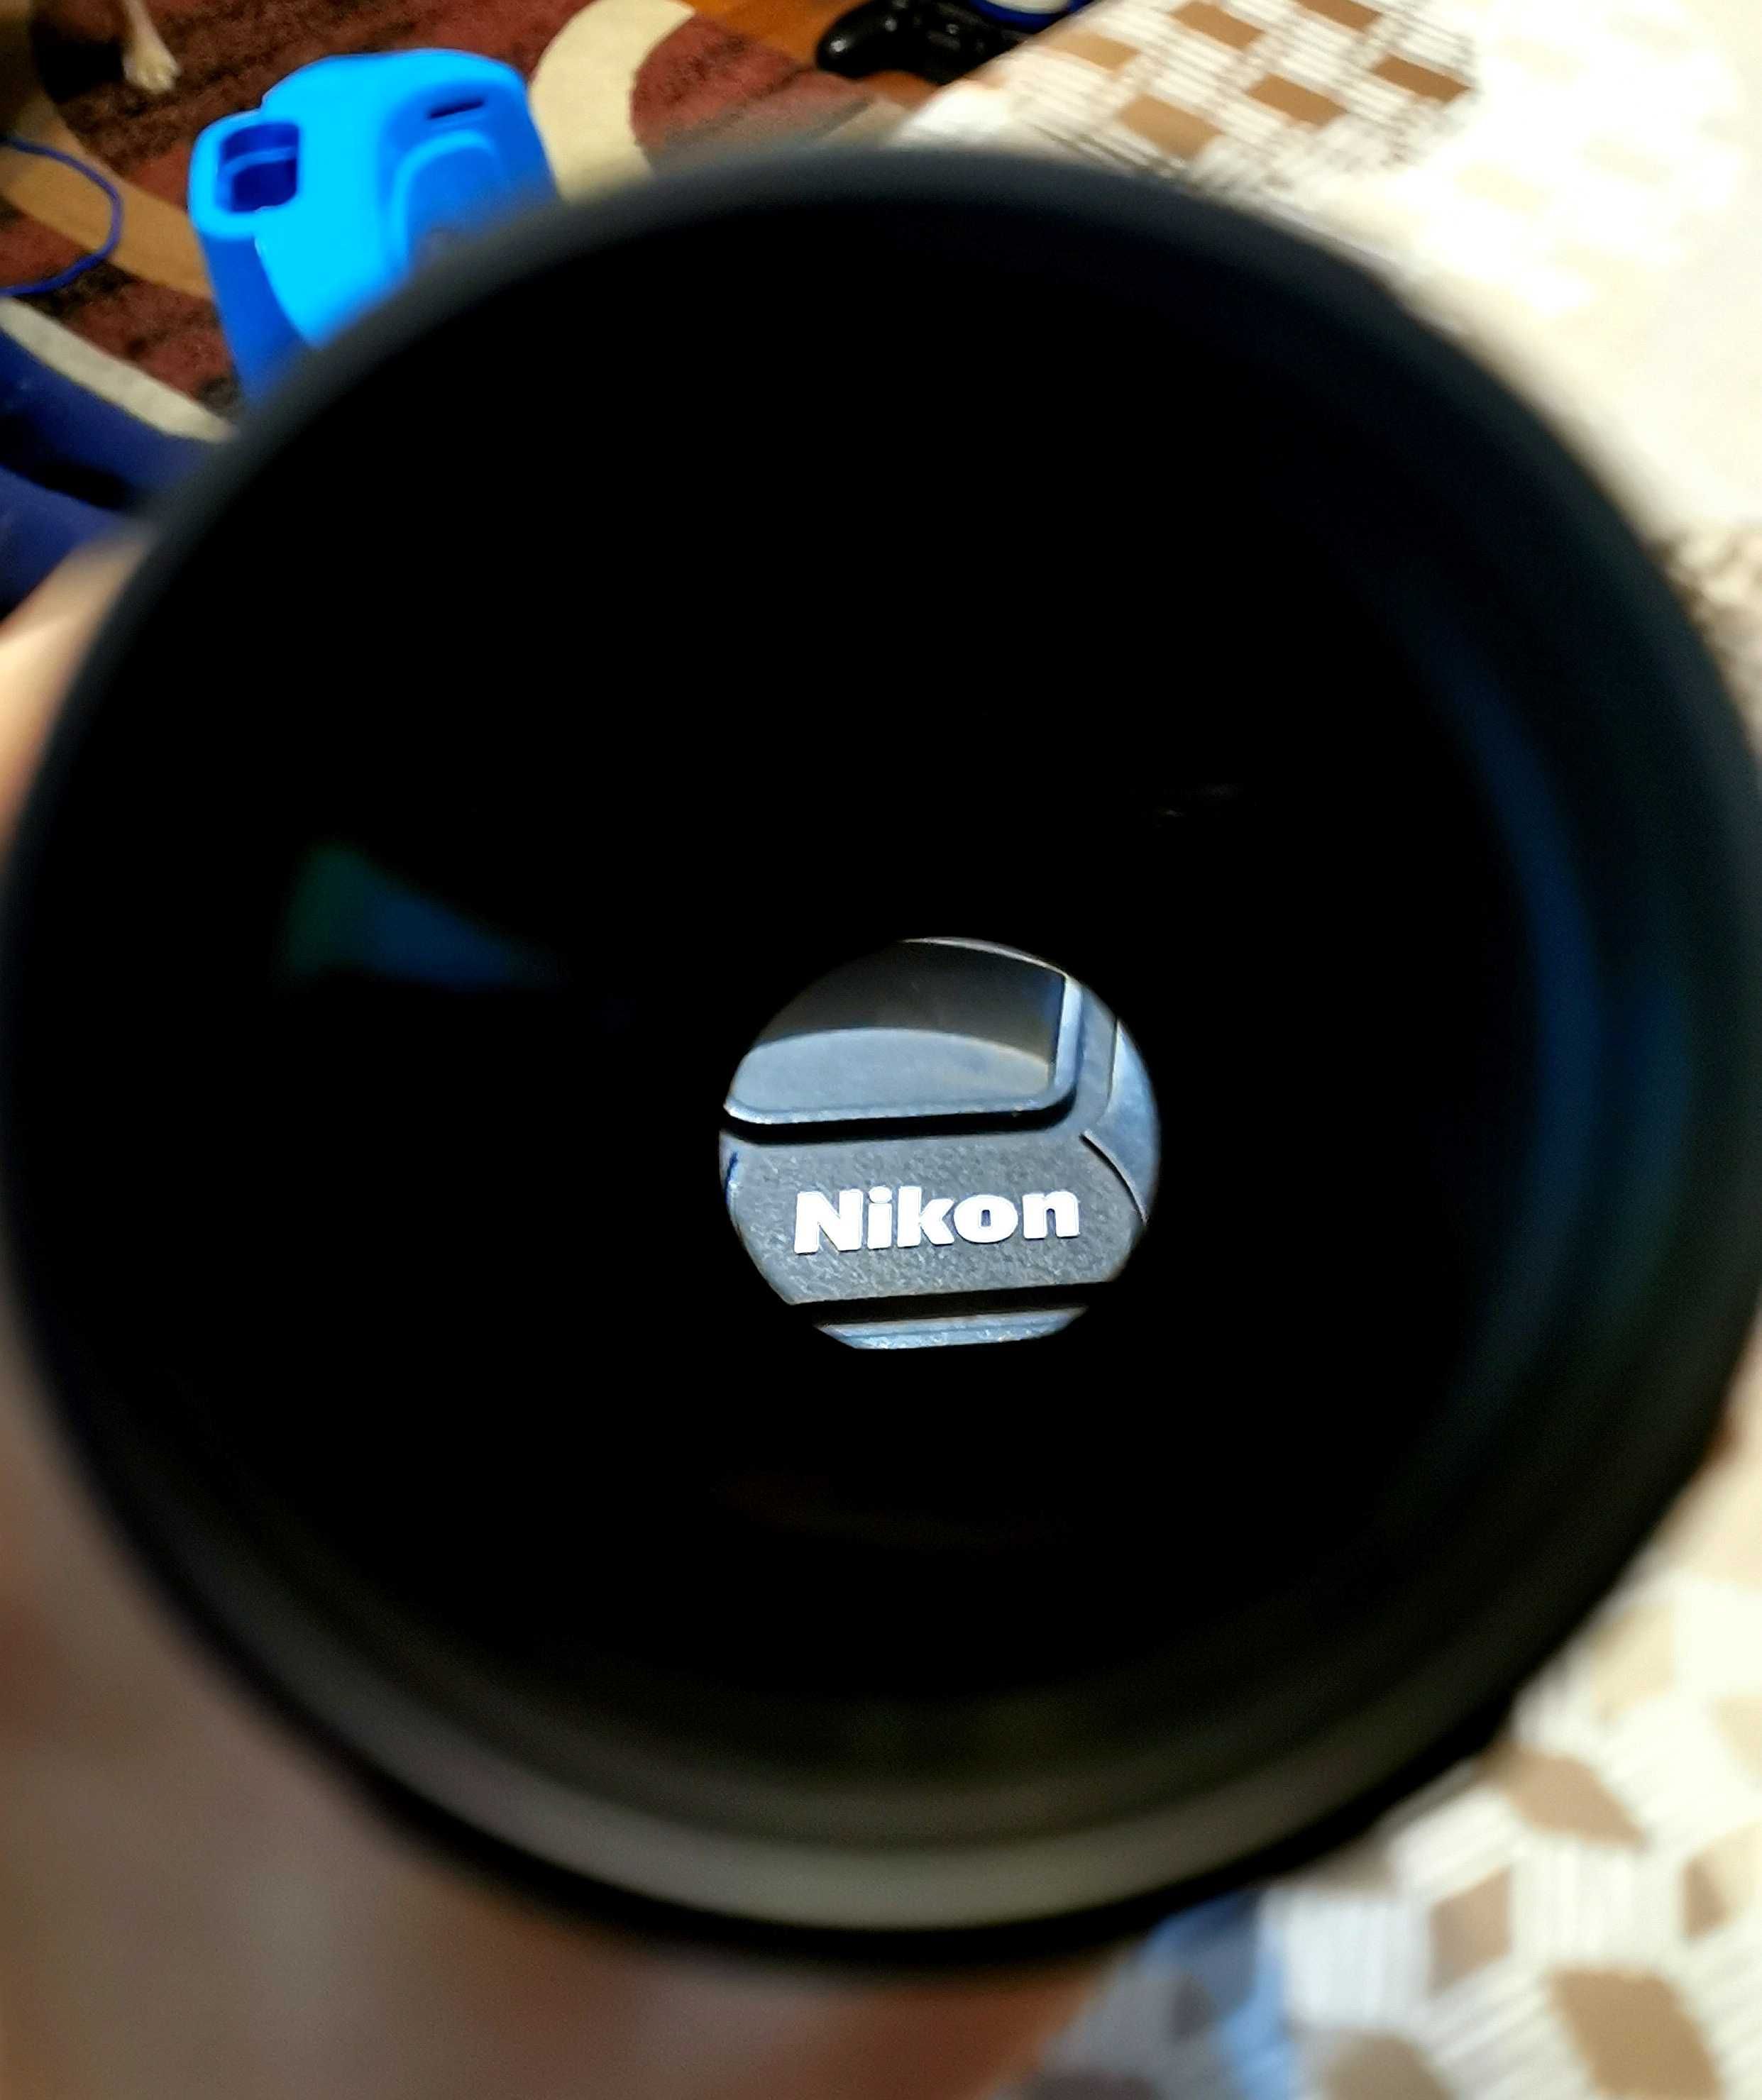 Nikon obiectiv profesional FullFrame 300mm f4 VR !!